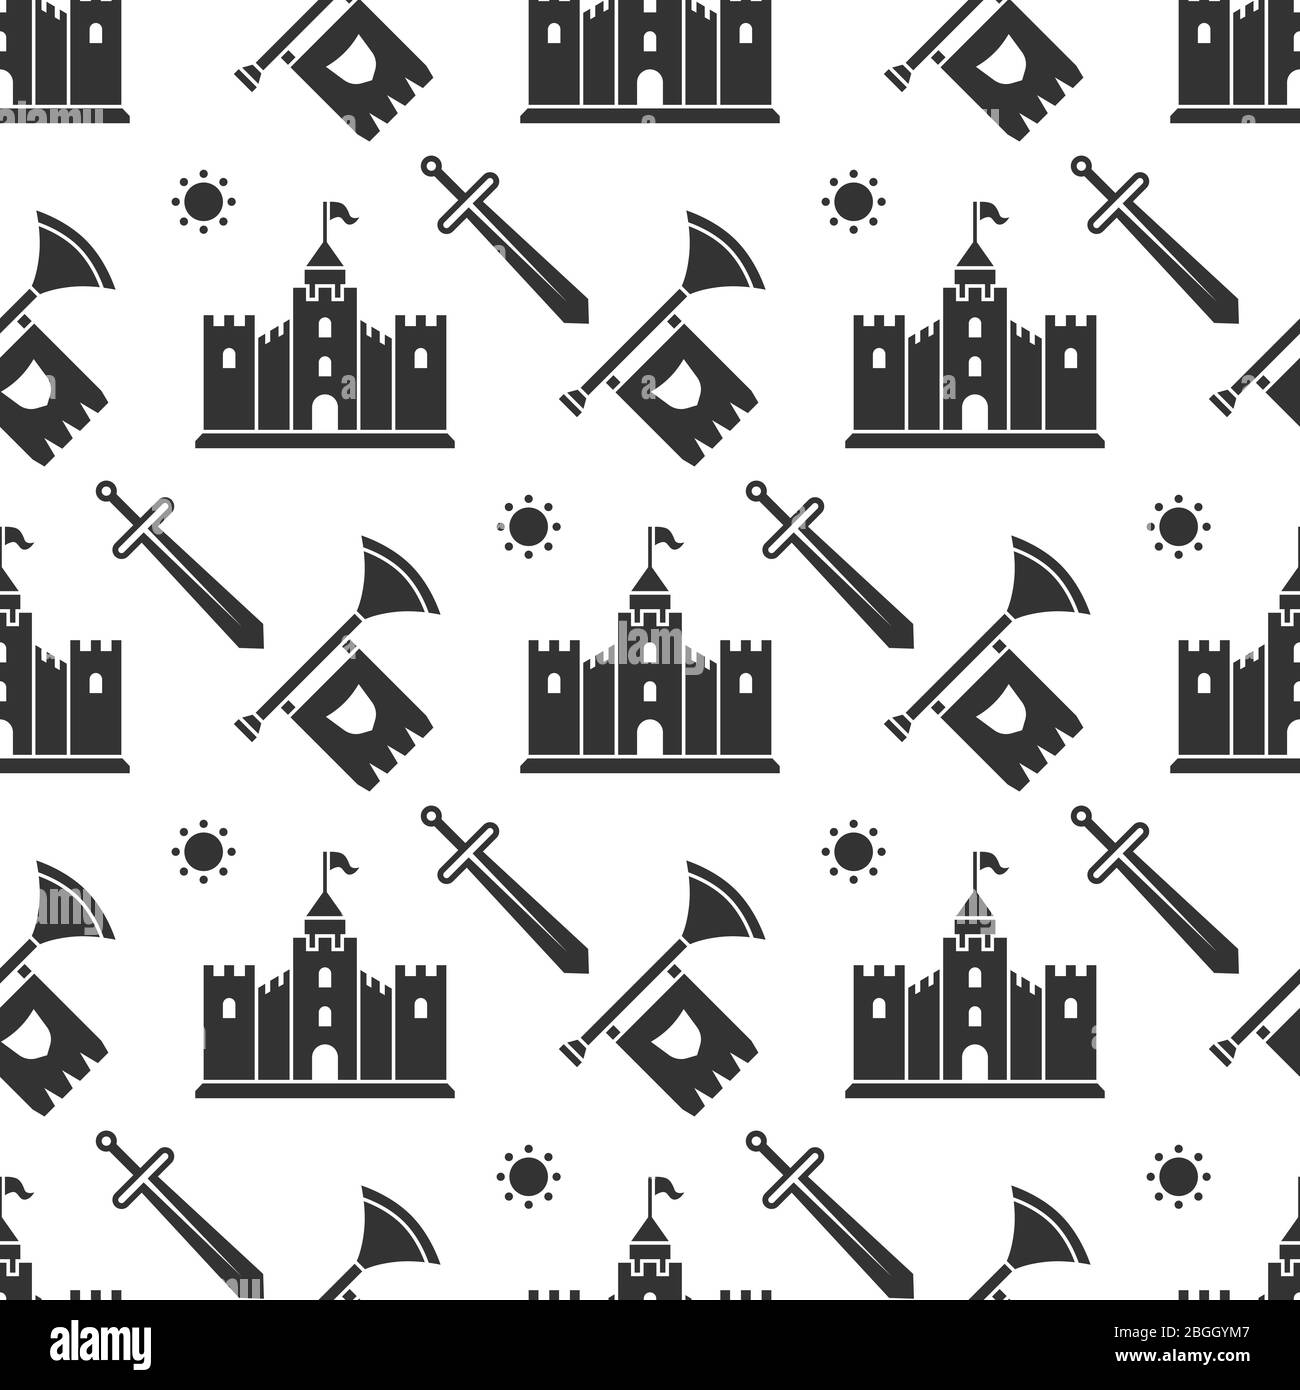 Swords, medieval castle, sword and tube seamless background pattern design. Vector illustration Stock Vector